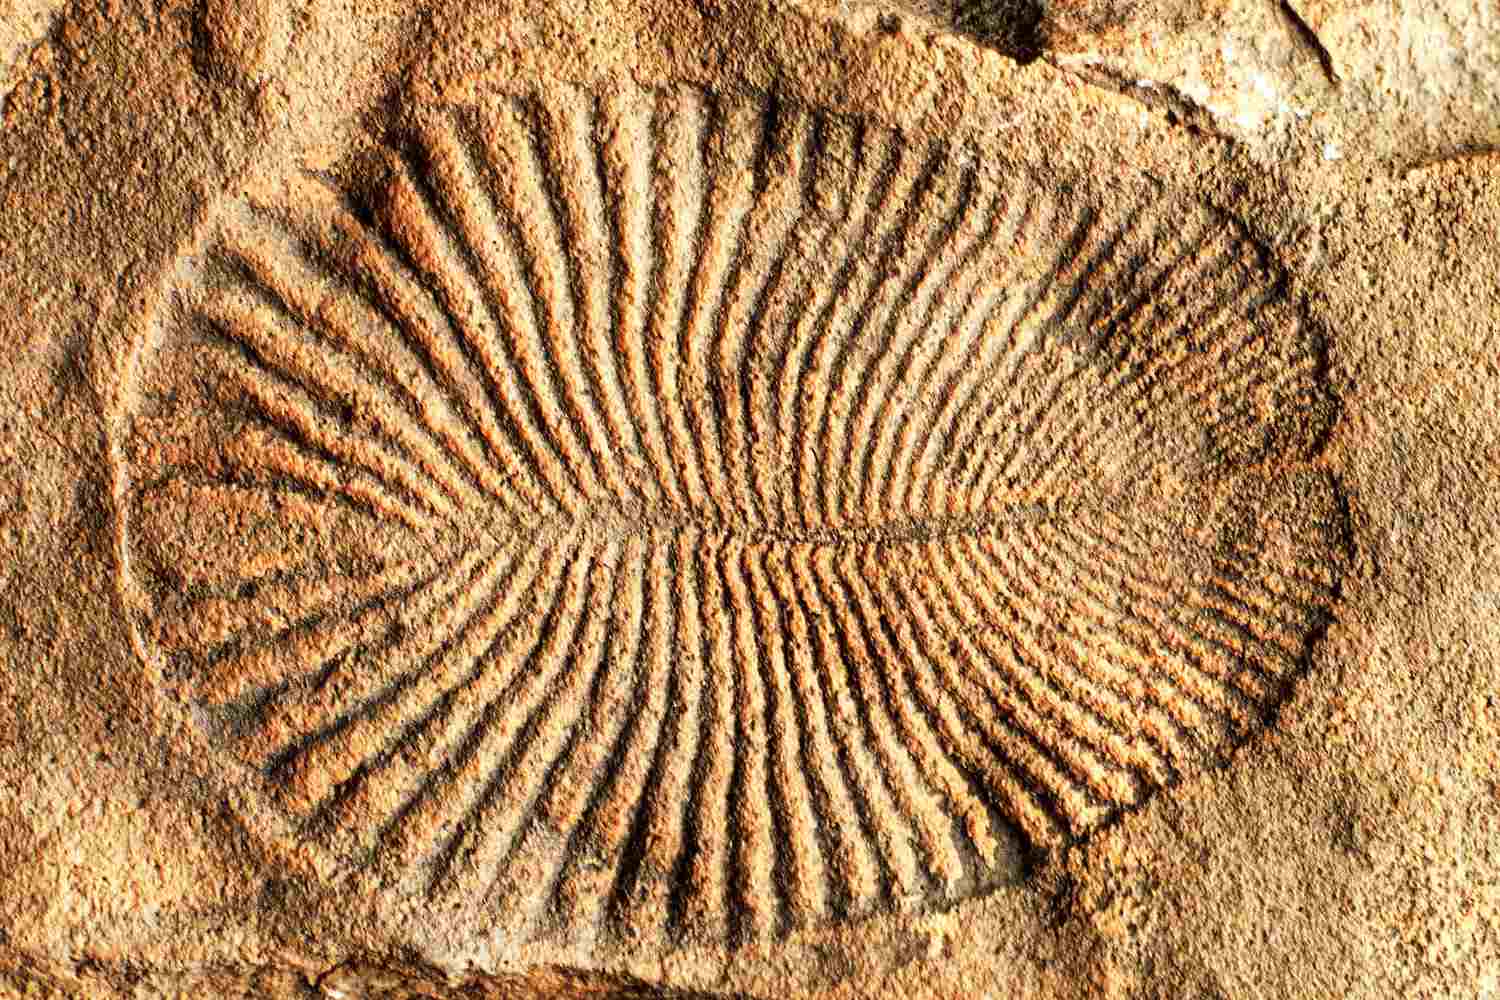 Fossil of Dickinsonia costar